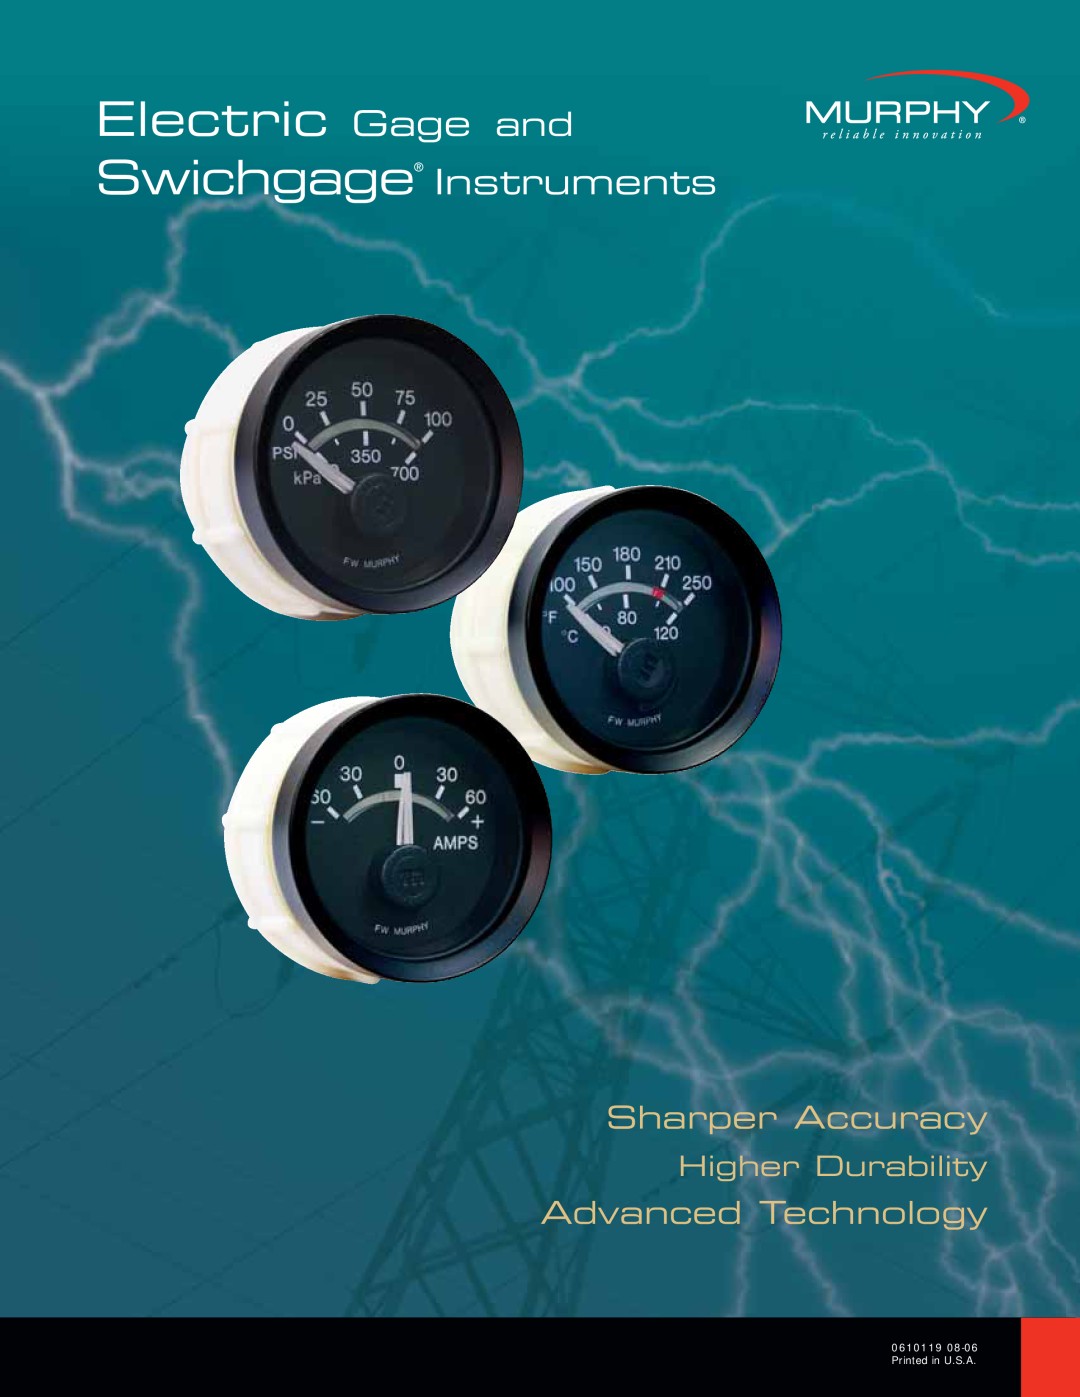 Murphy Electric Gage and Swichgage manual Swichgage Instruments, Sharper Accuracy, Advanced Technology, Higher Durability 